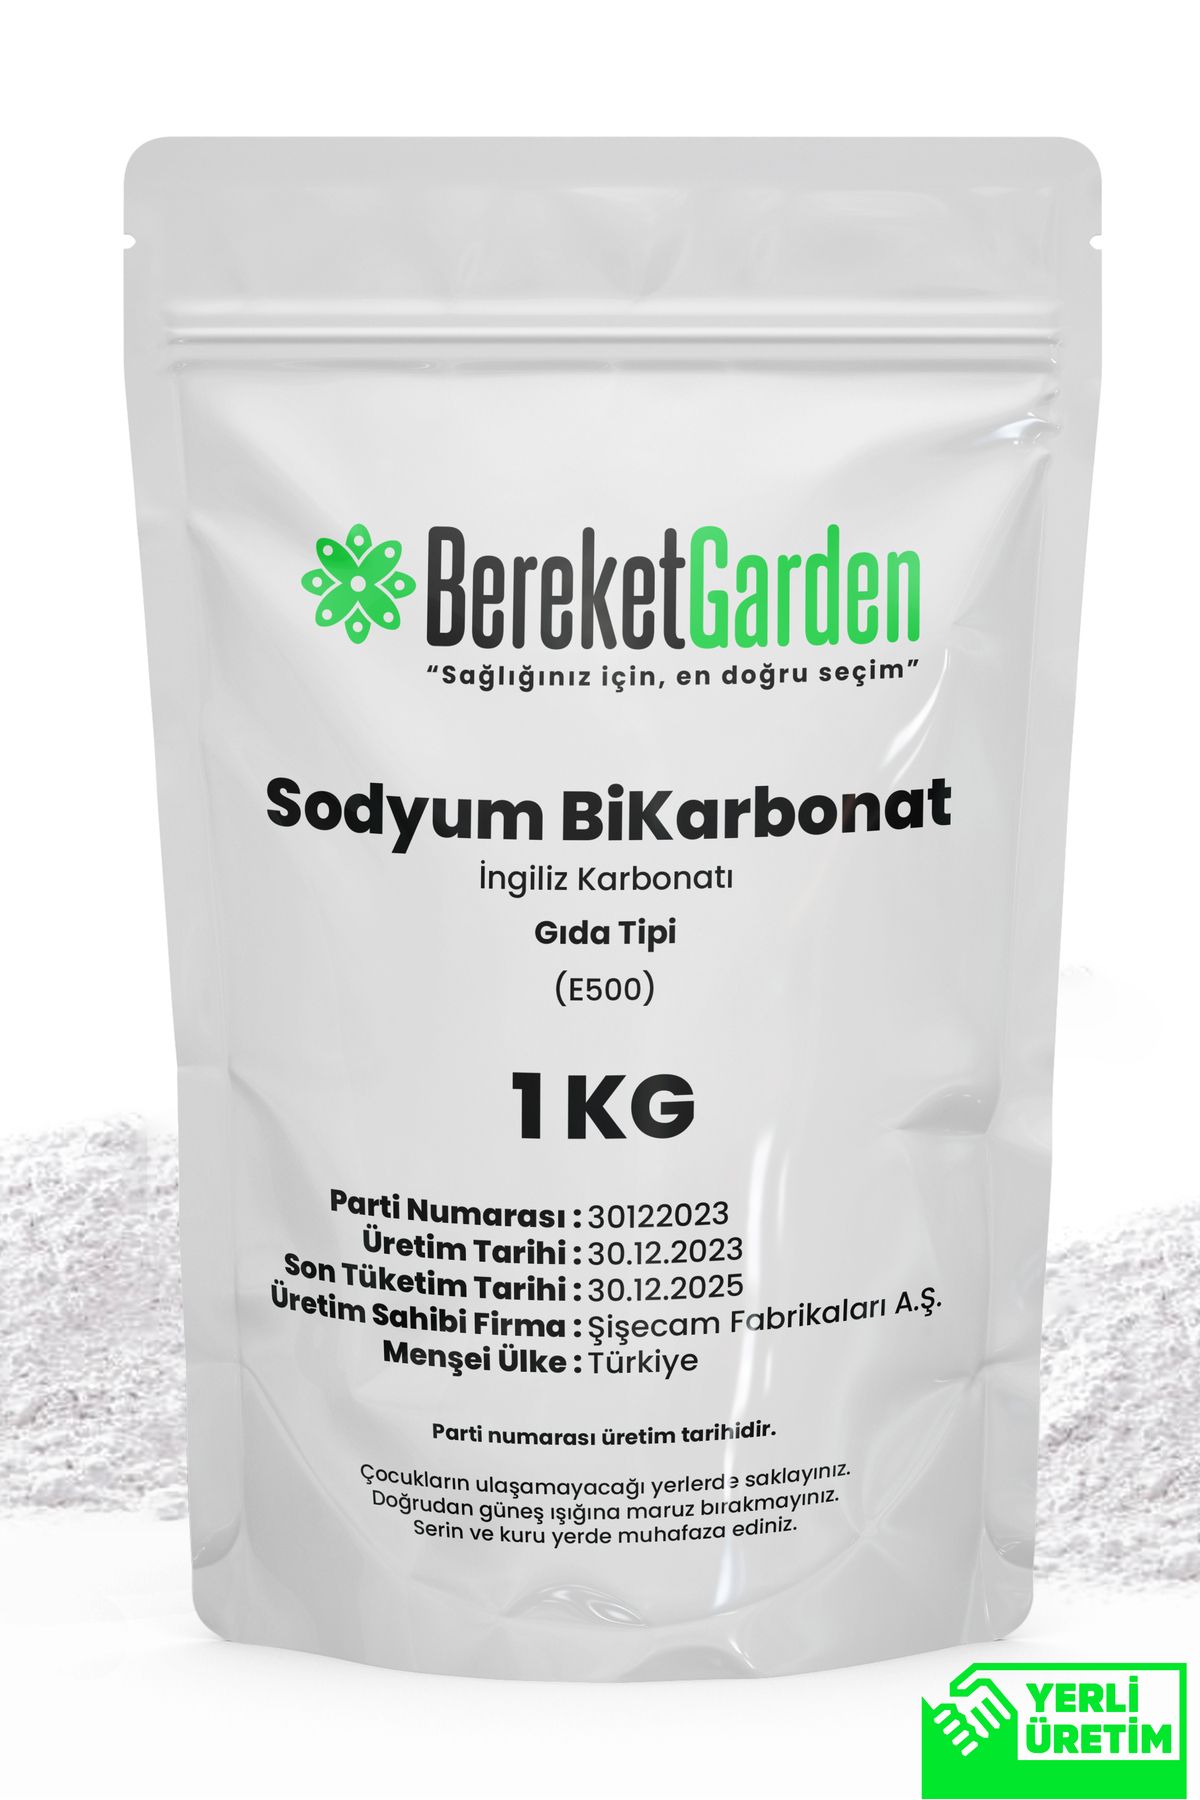 BereketGarden Sodyum Bikarbonat 1 Kg - Ingiliz Karbonatı (gıda Tipi)